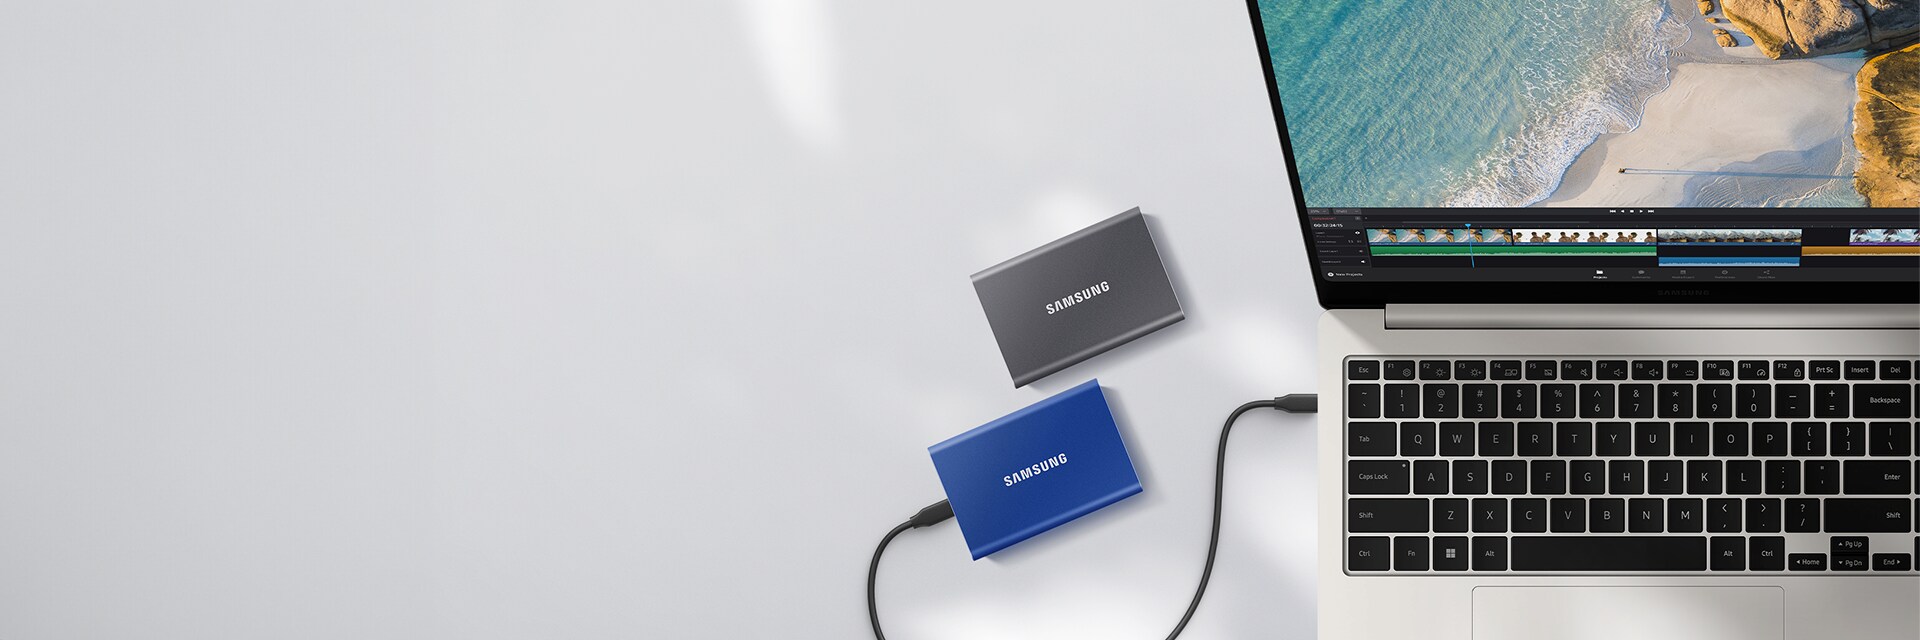 Samsung T7 Portable SSD | Samsung Semiconductor Global